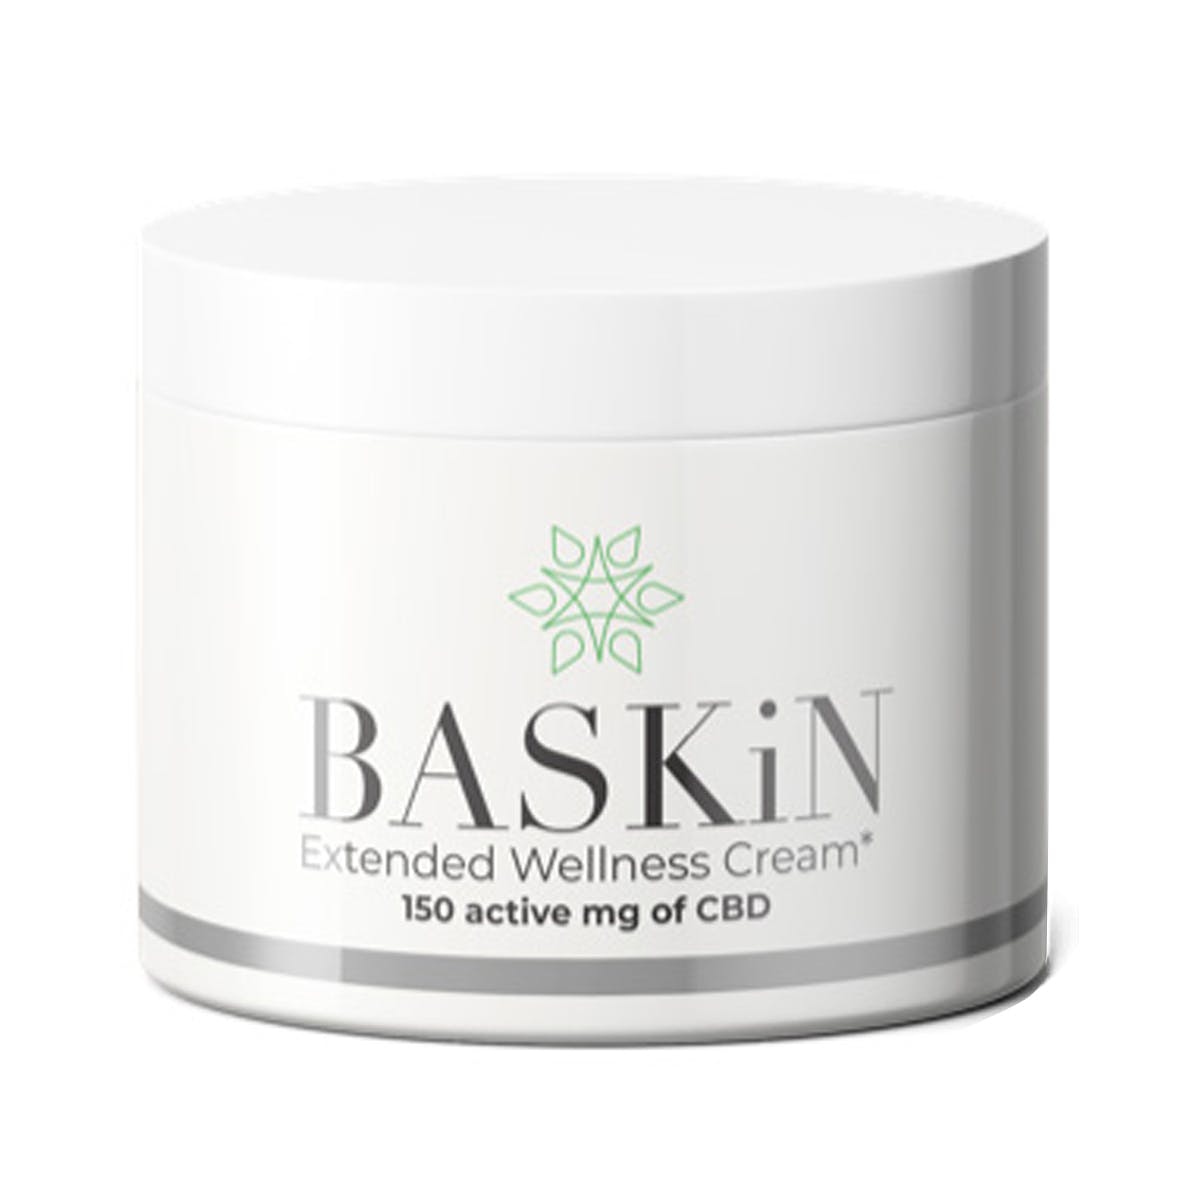 BaskiN Extended Wellness Cream – 150mg Active CBD